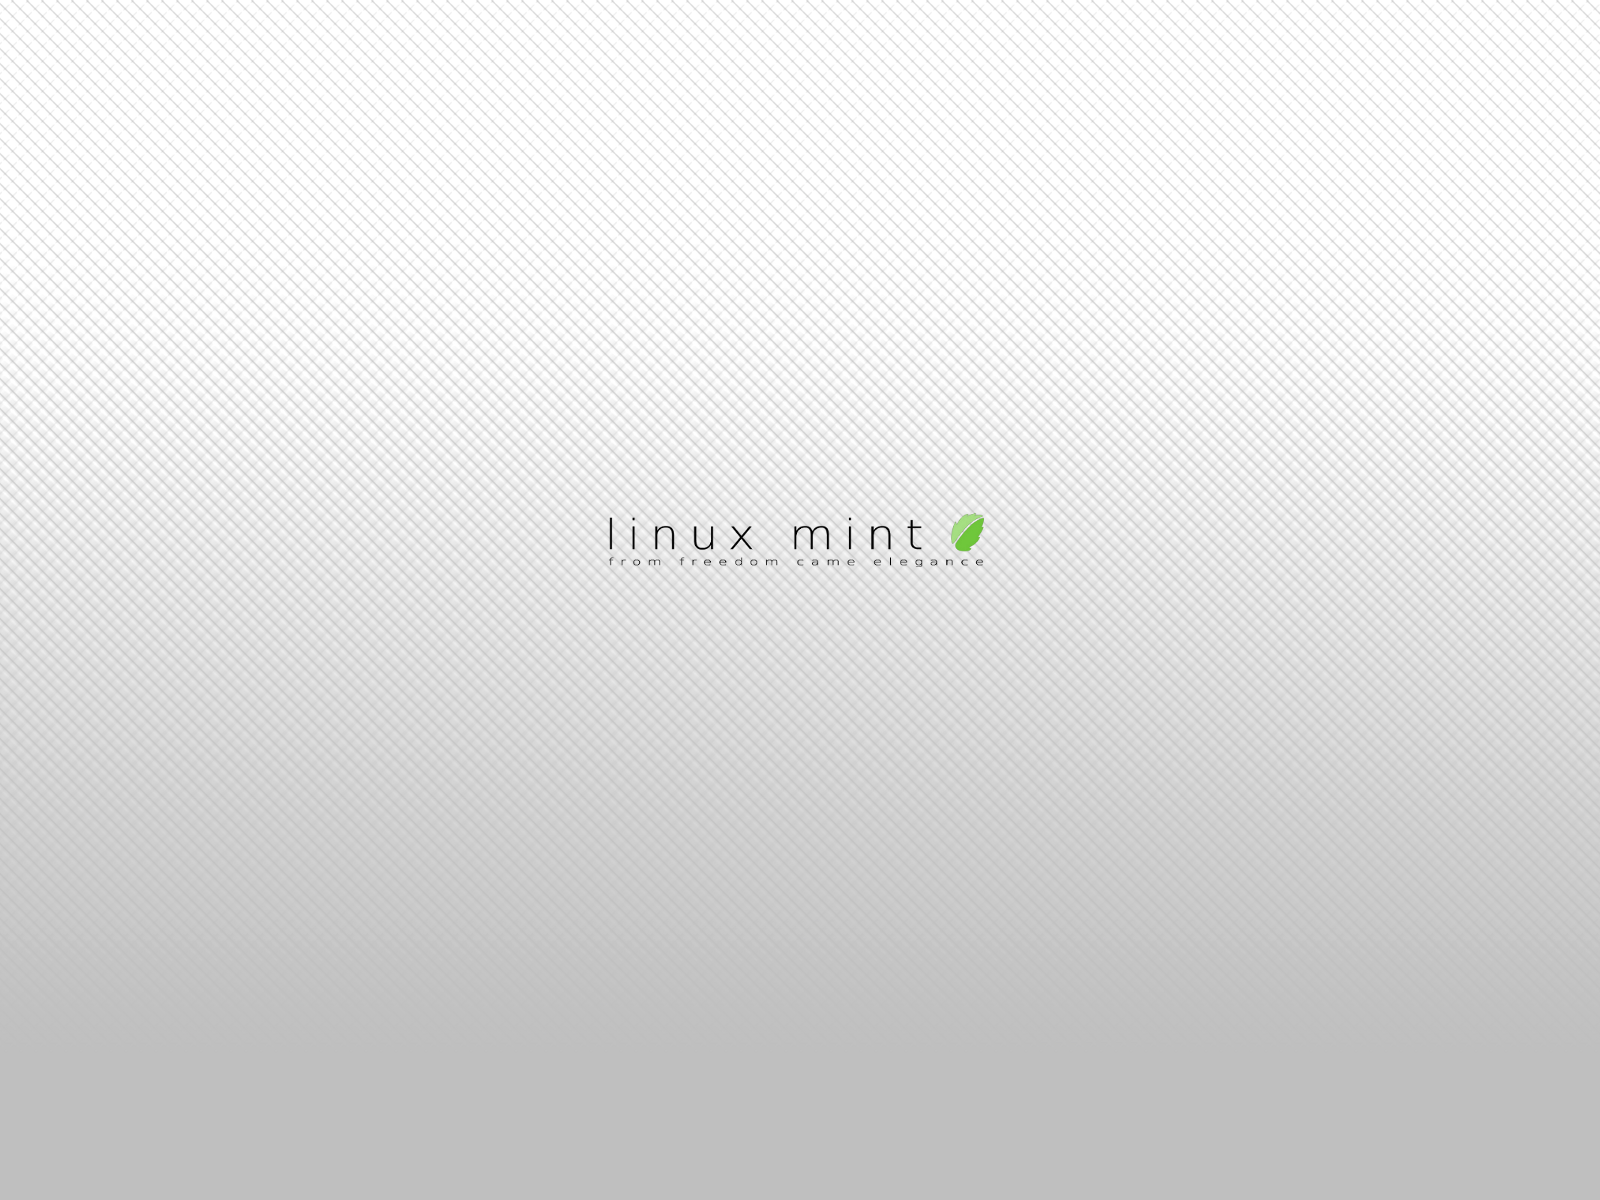 Polar Mint New Wallpaper Linux Mint Forums